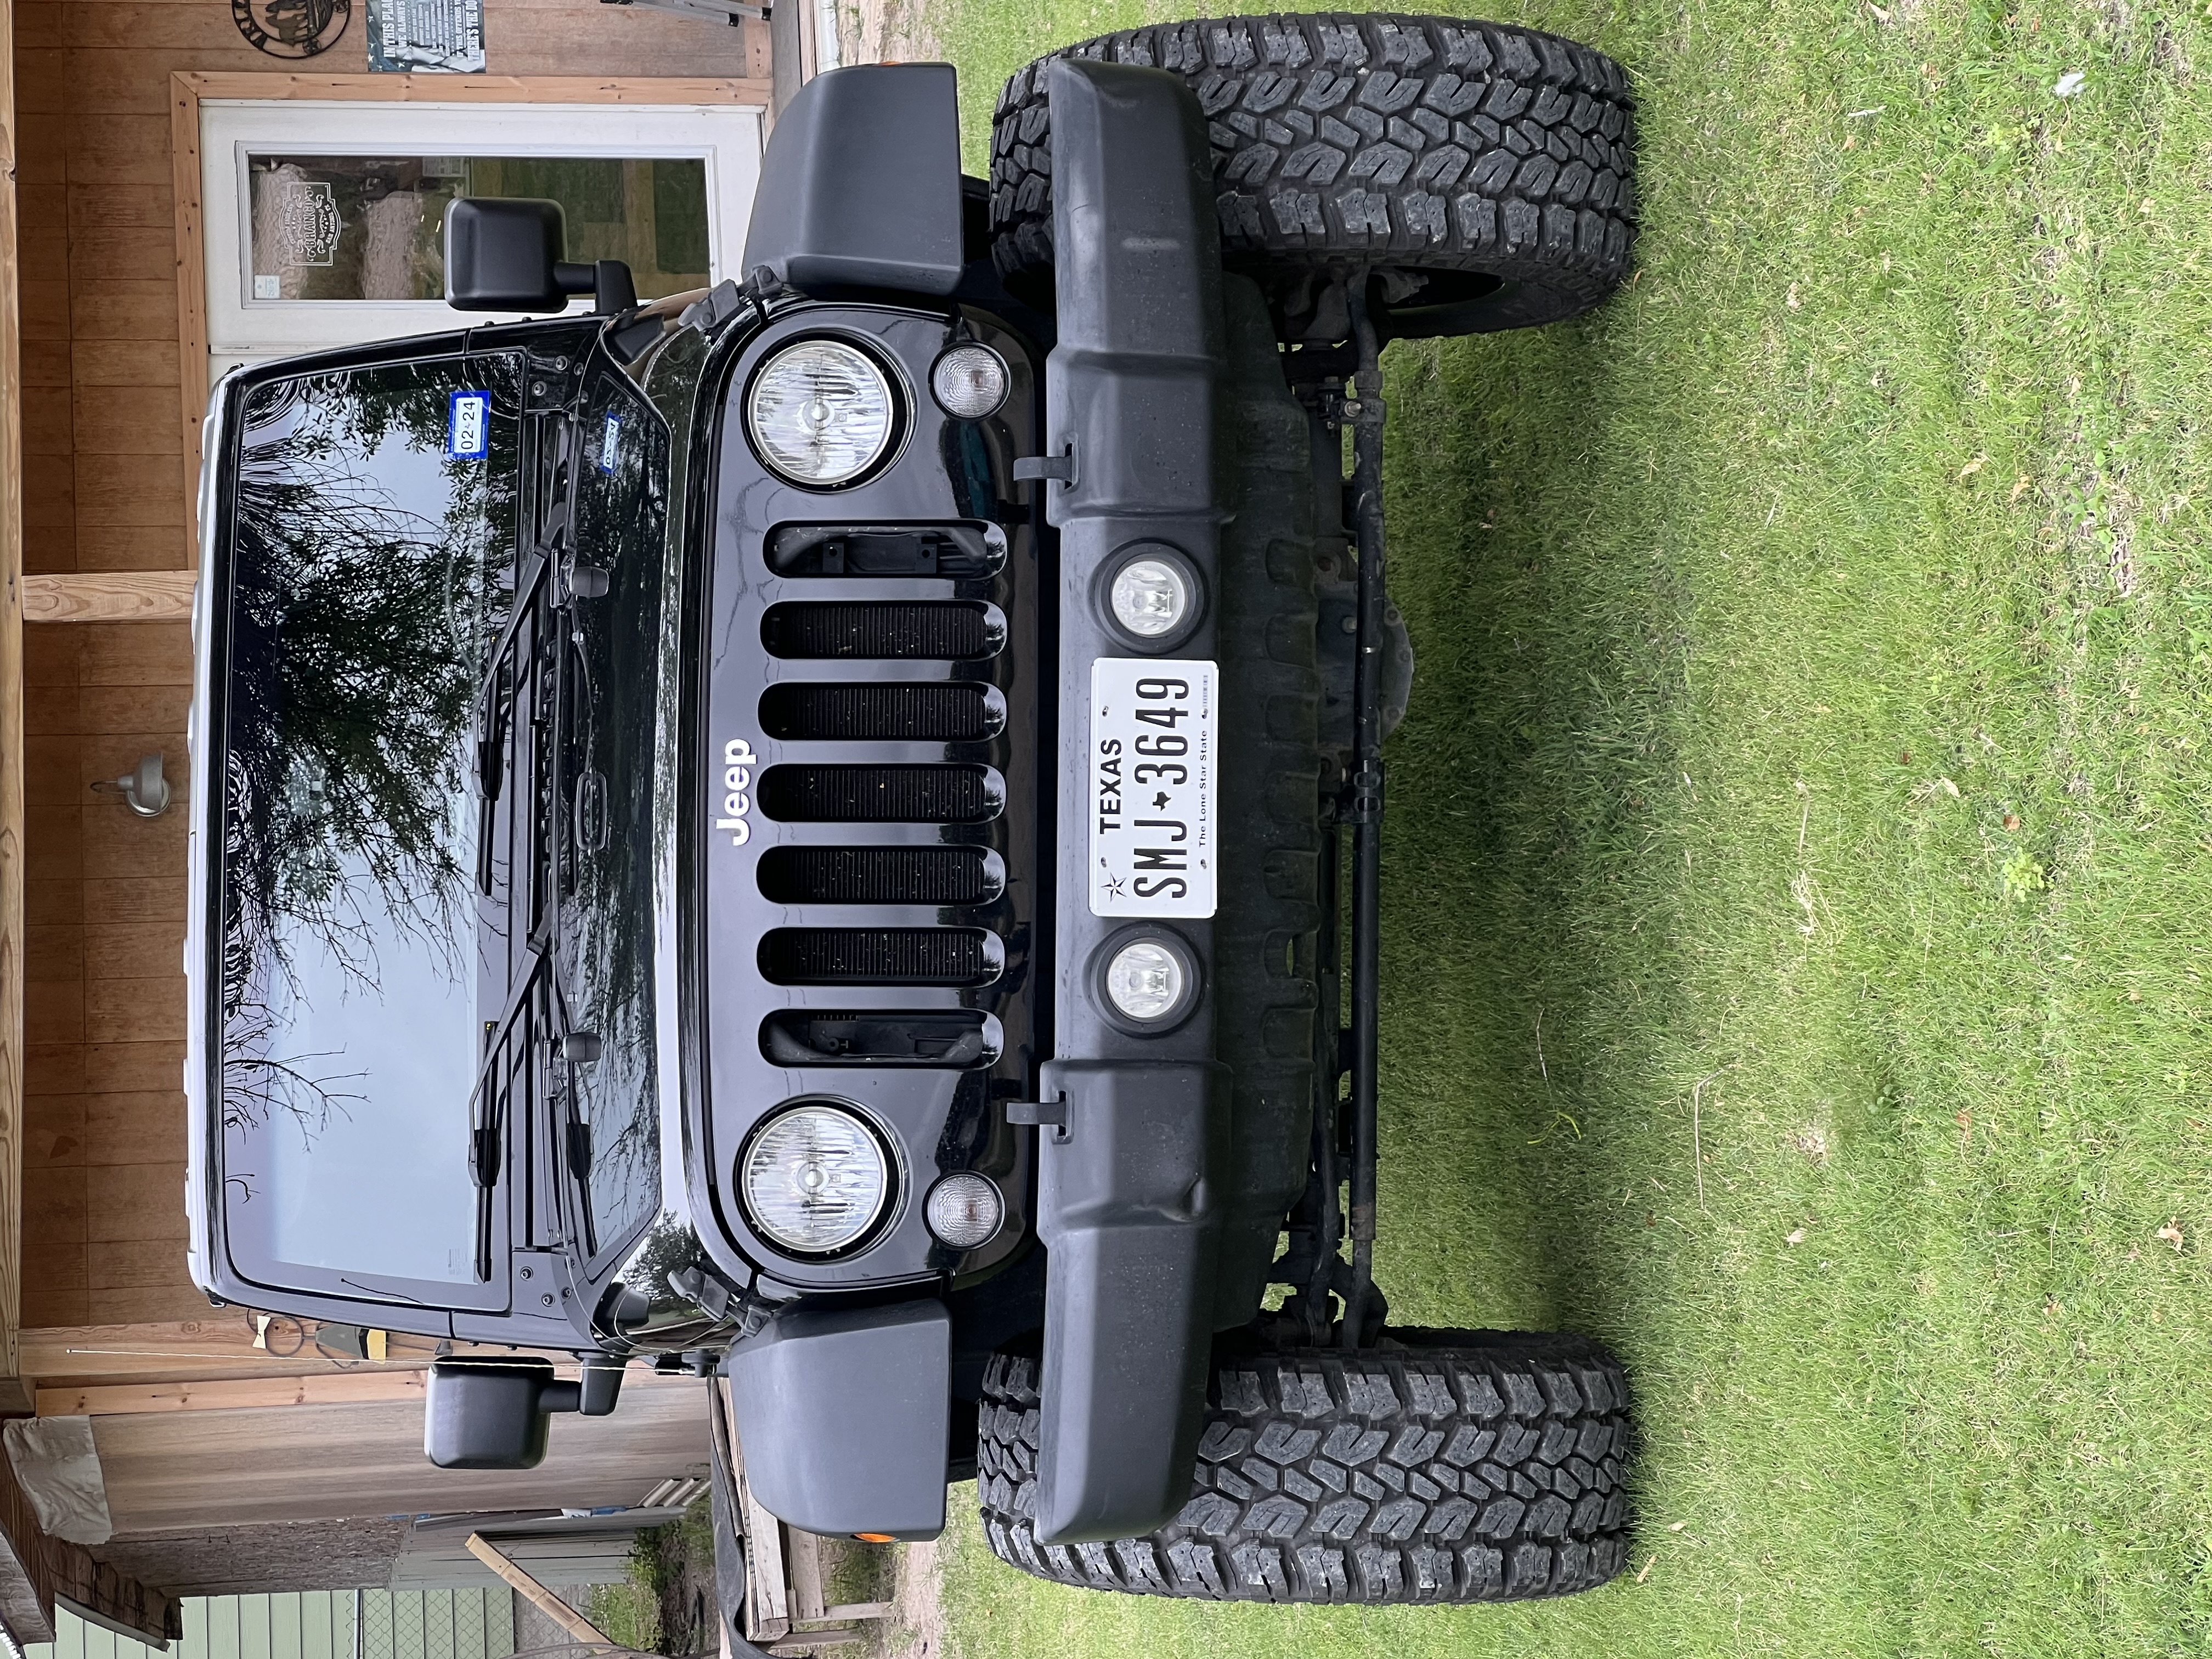 4 Inch Lift Kit, Jeep Wrangler JK 2WD/4WD (2007-2018)